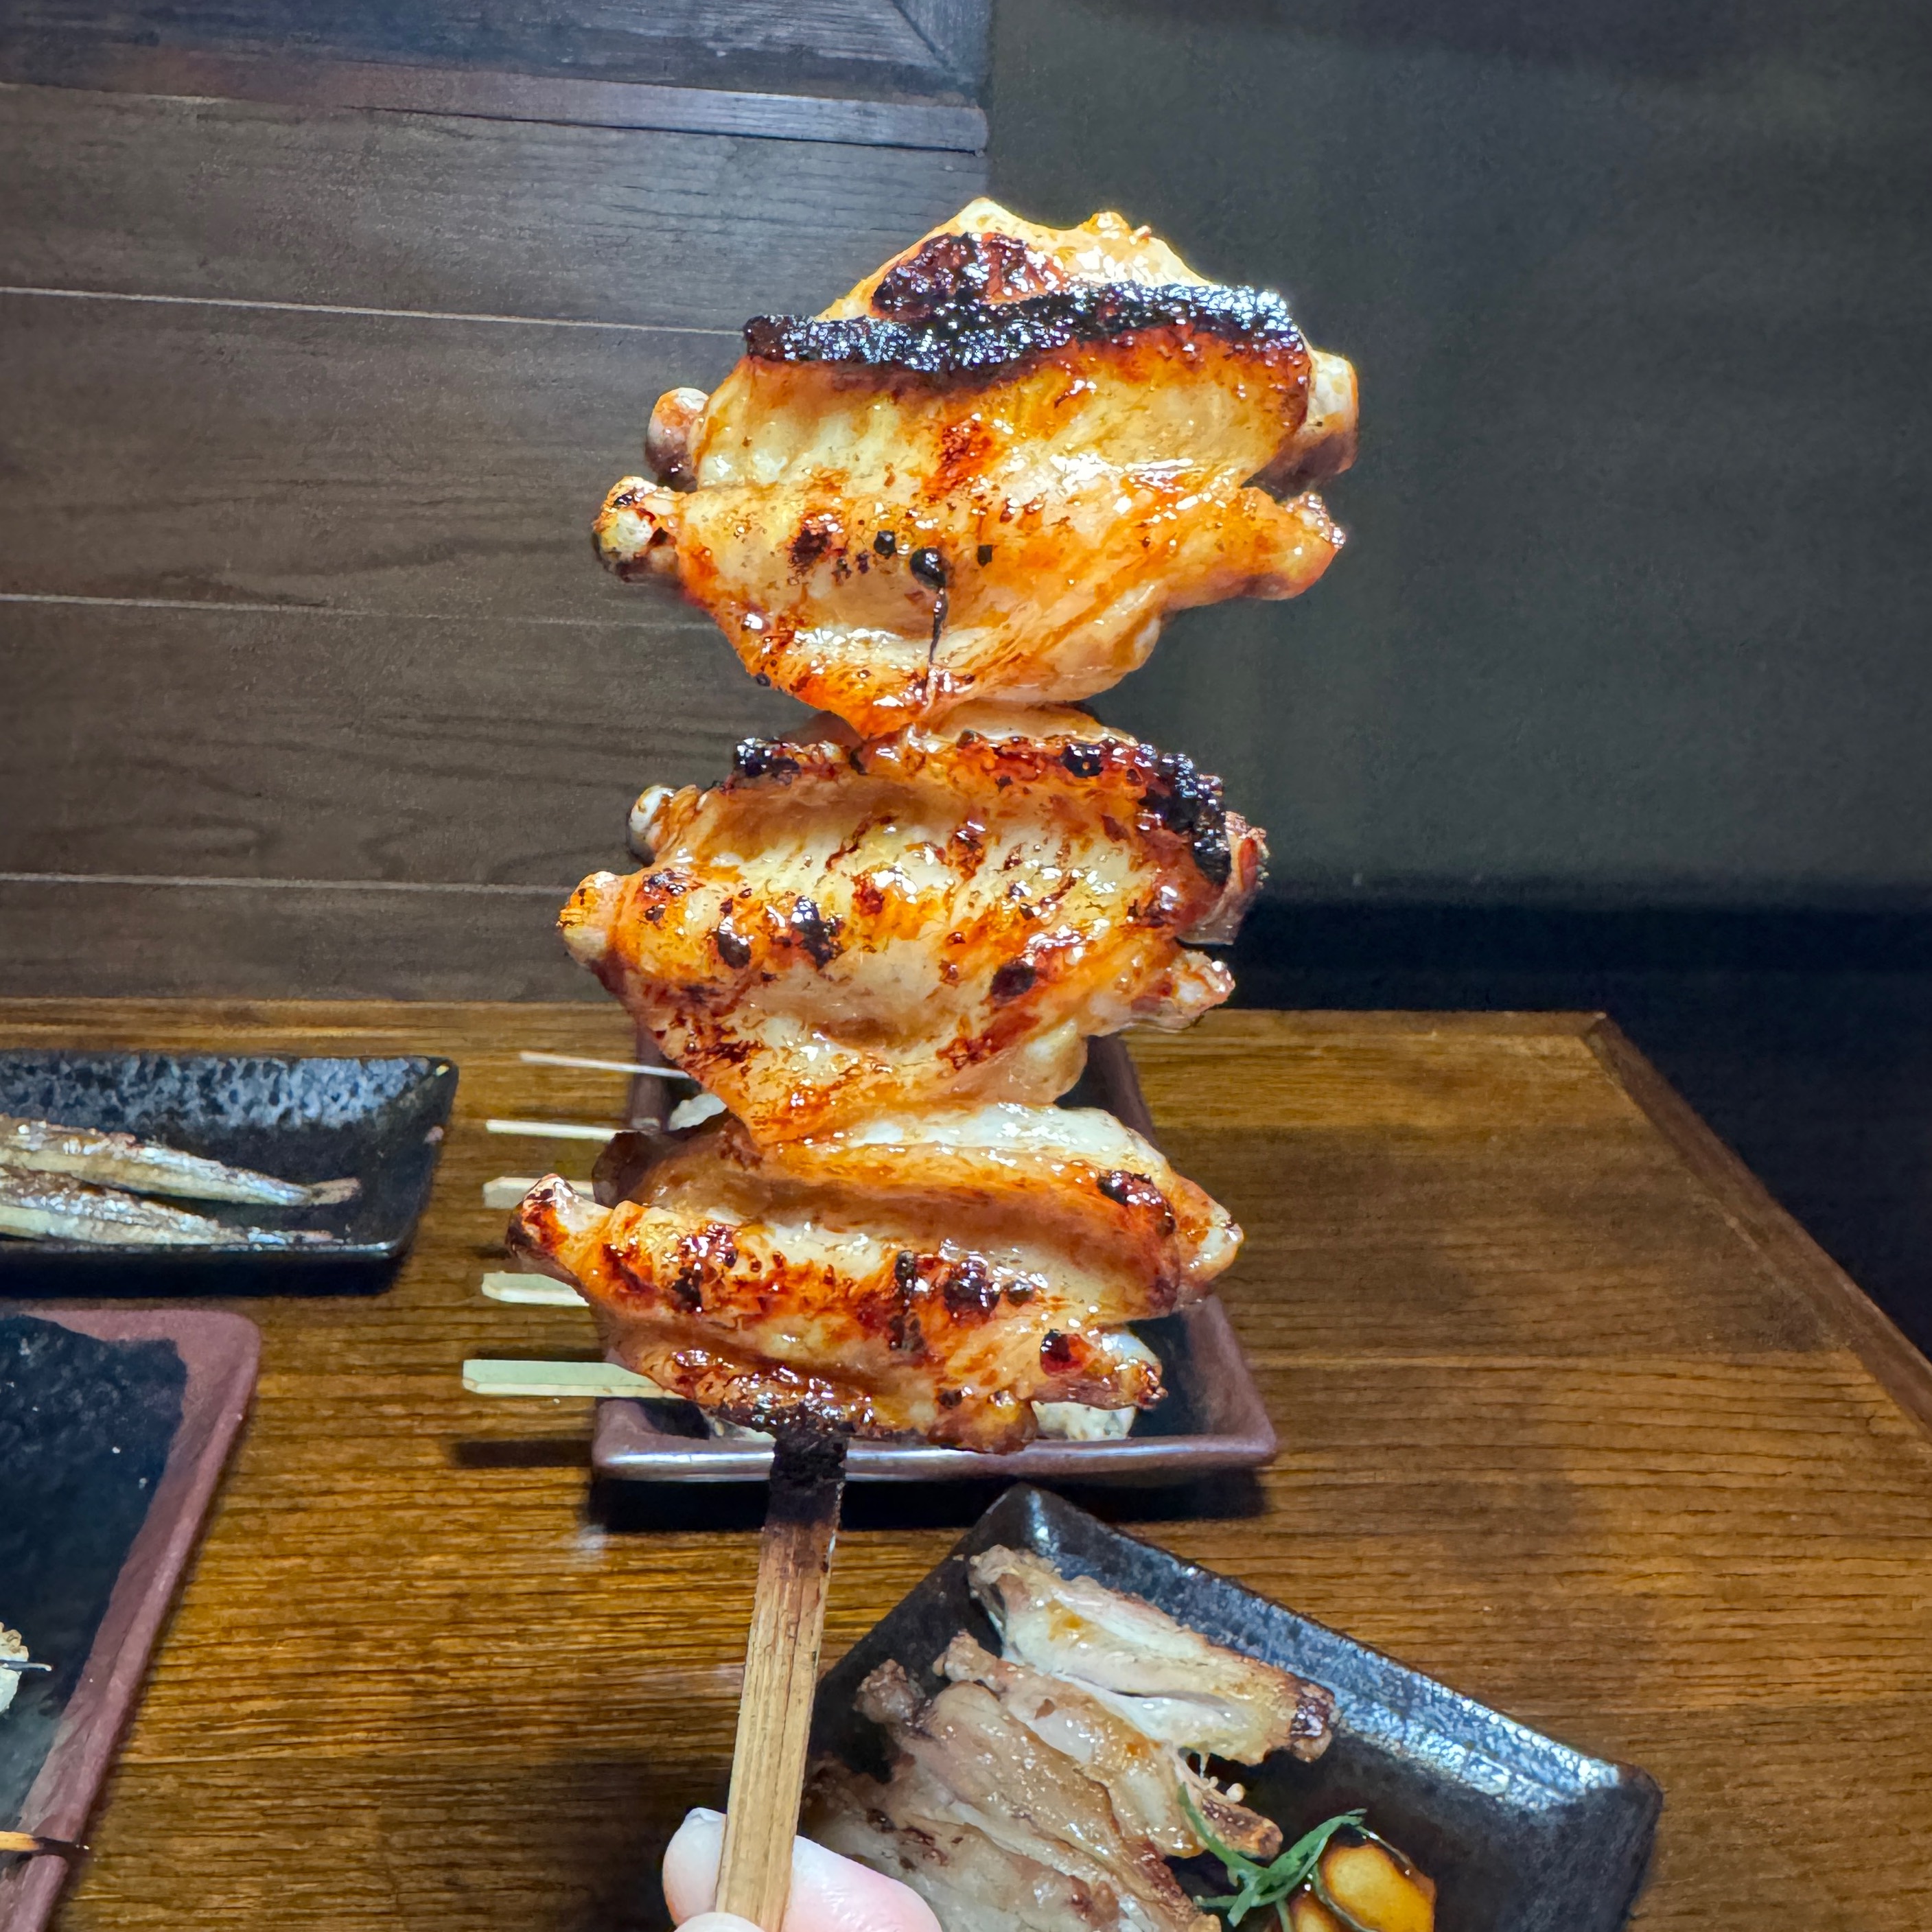 Spicy Chicken Wings $4.50 at Yakitori Koshiji on #foodmento http://foodmento.com/place/14611